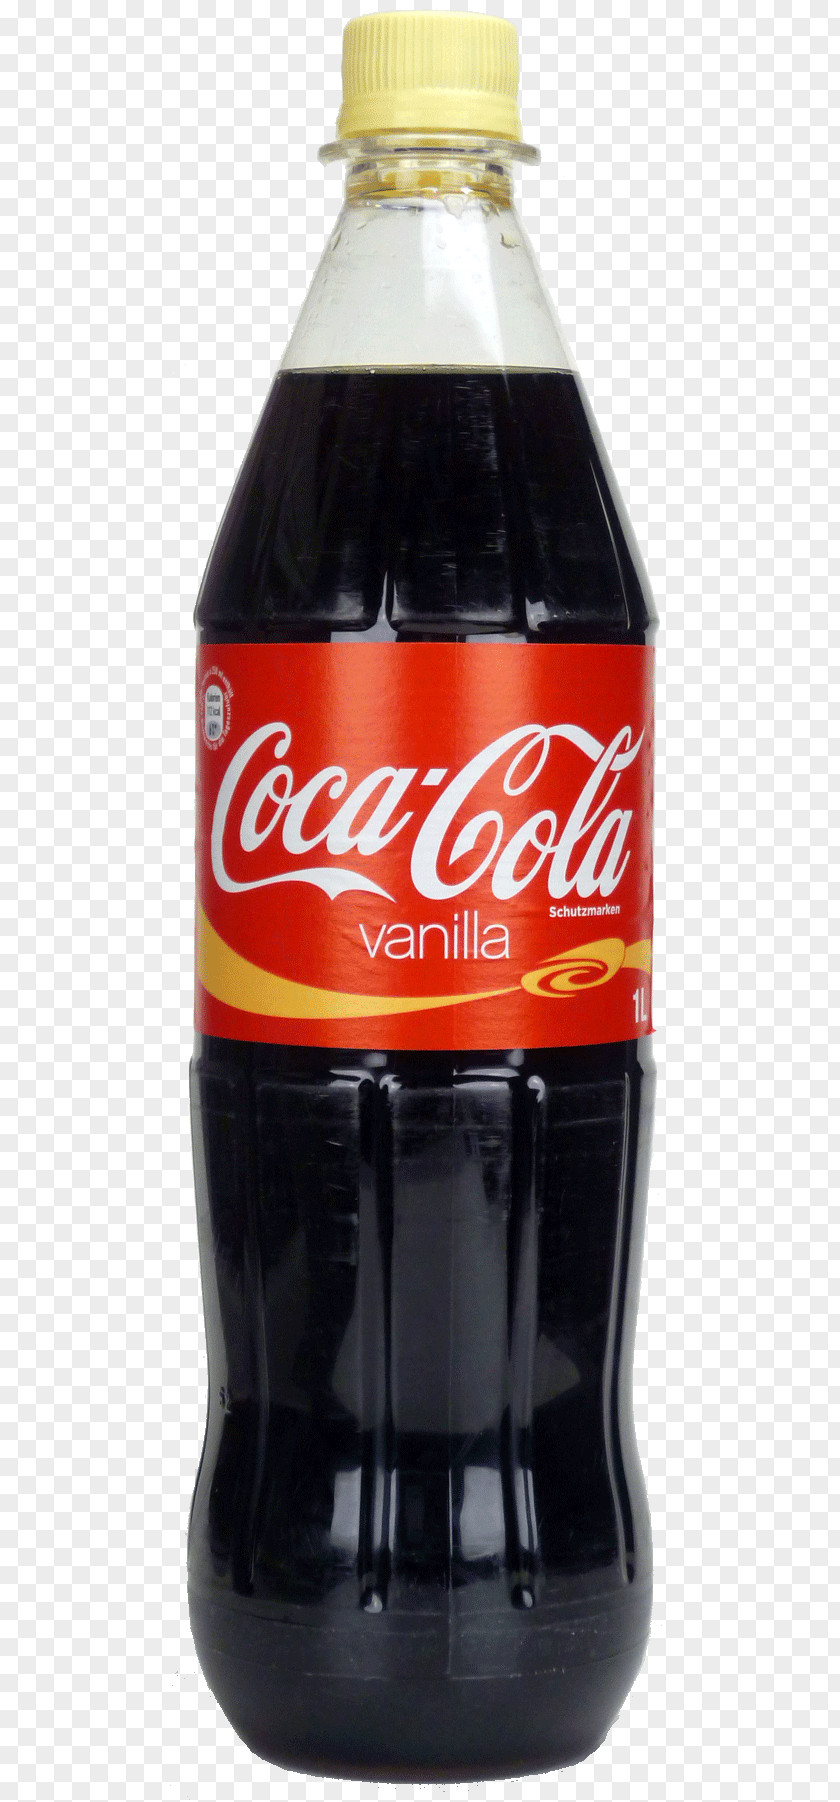 Coca Cola Bottle Image Coca-Cola Cherry Soft Drink Diet Coke PNG